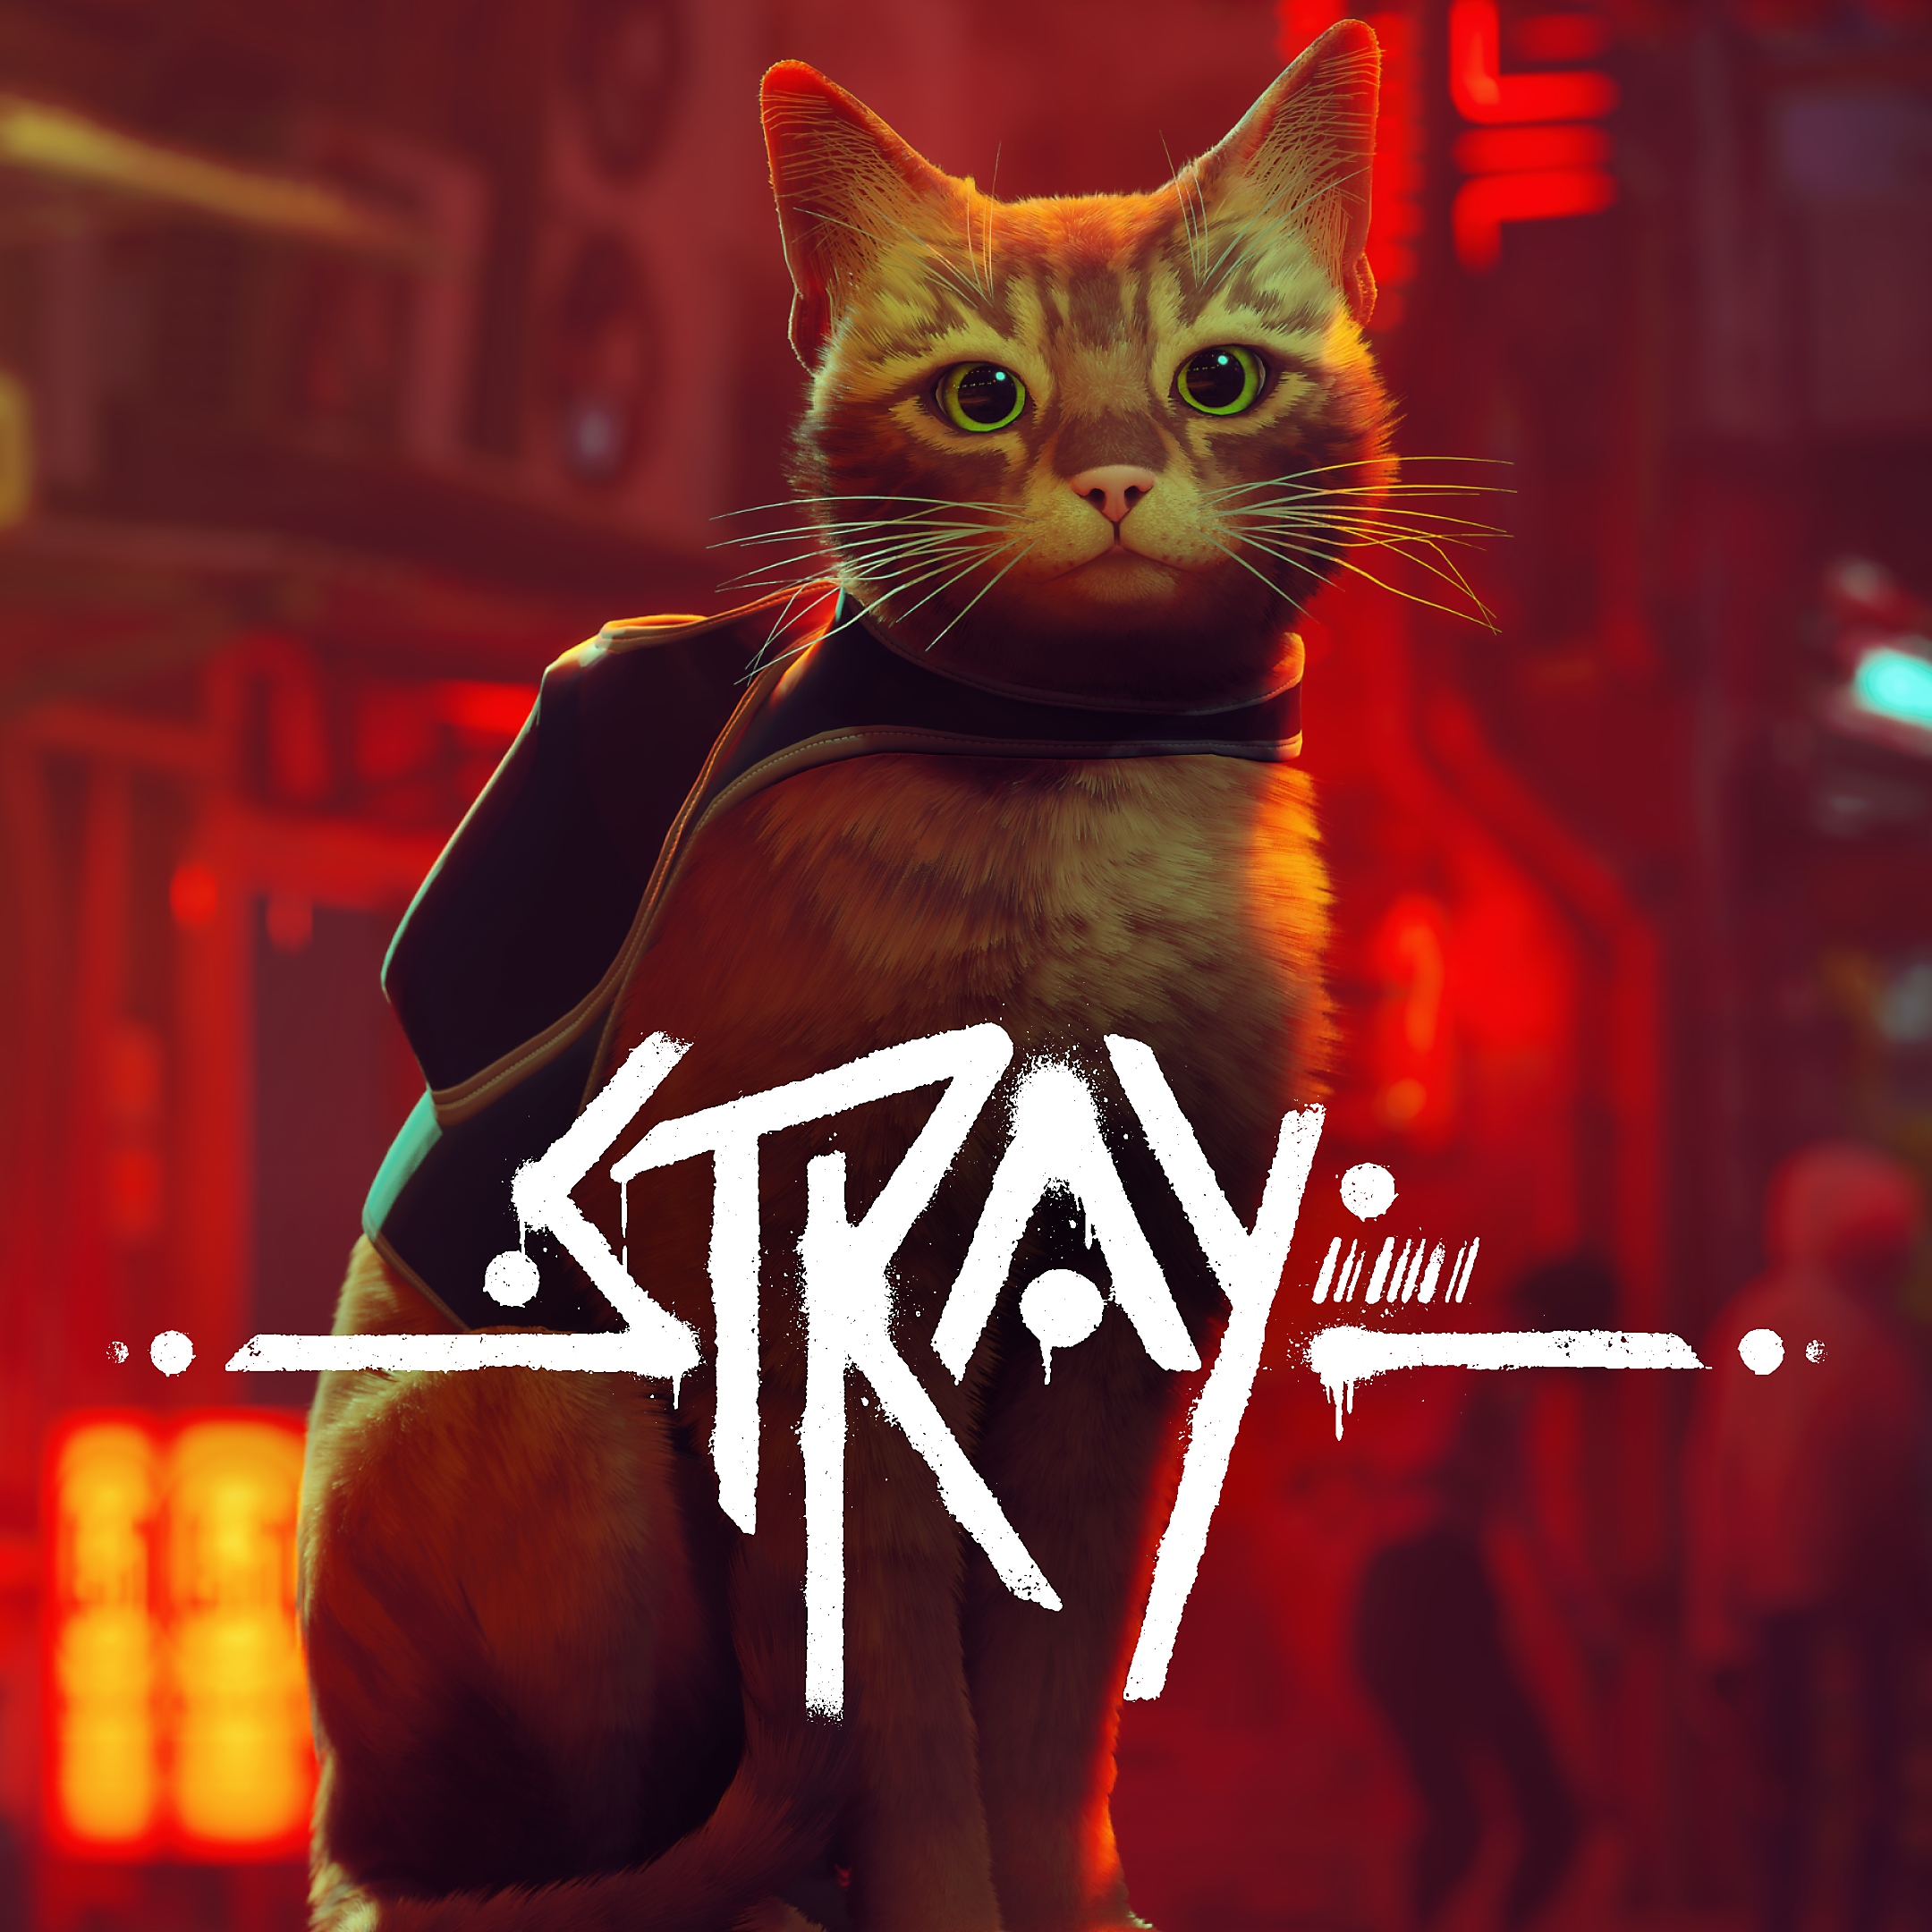 Stray-Grafik einer Katze mit rötlichem Fell